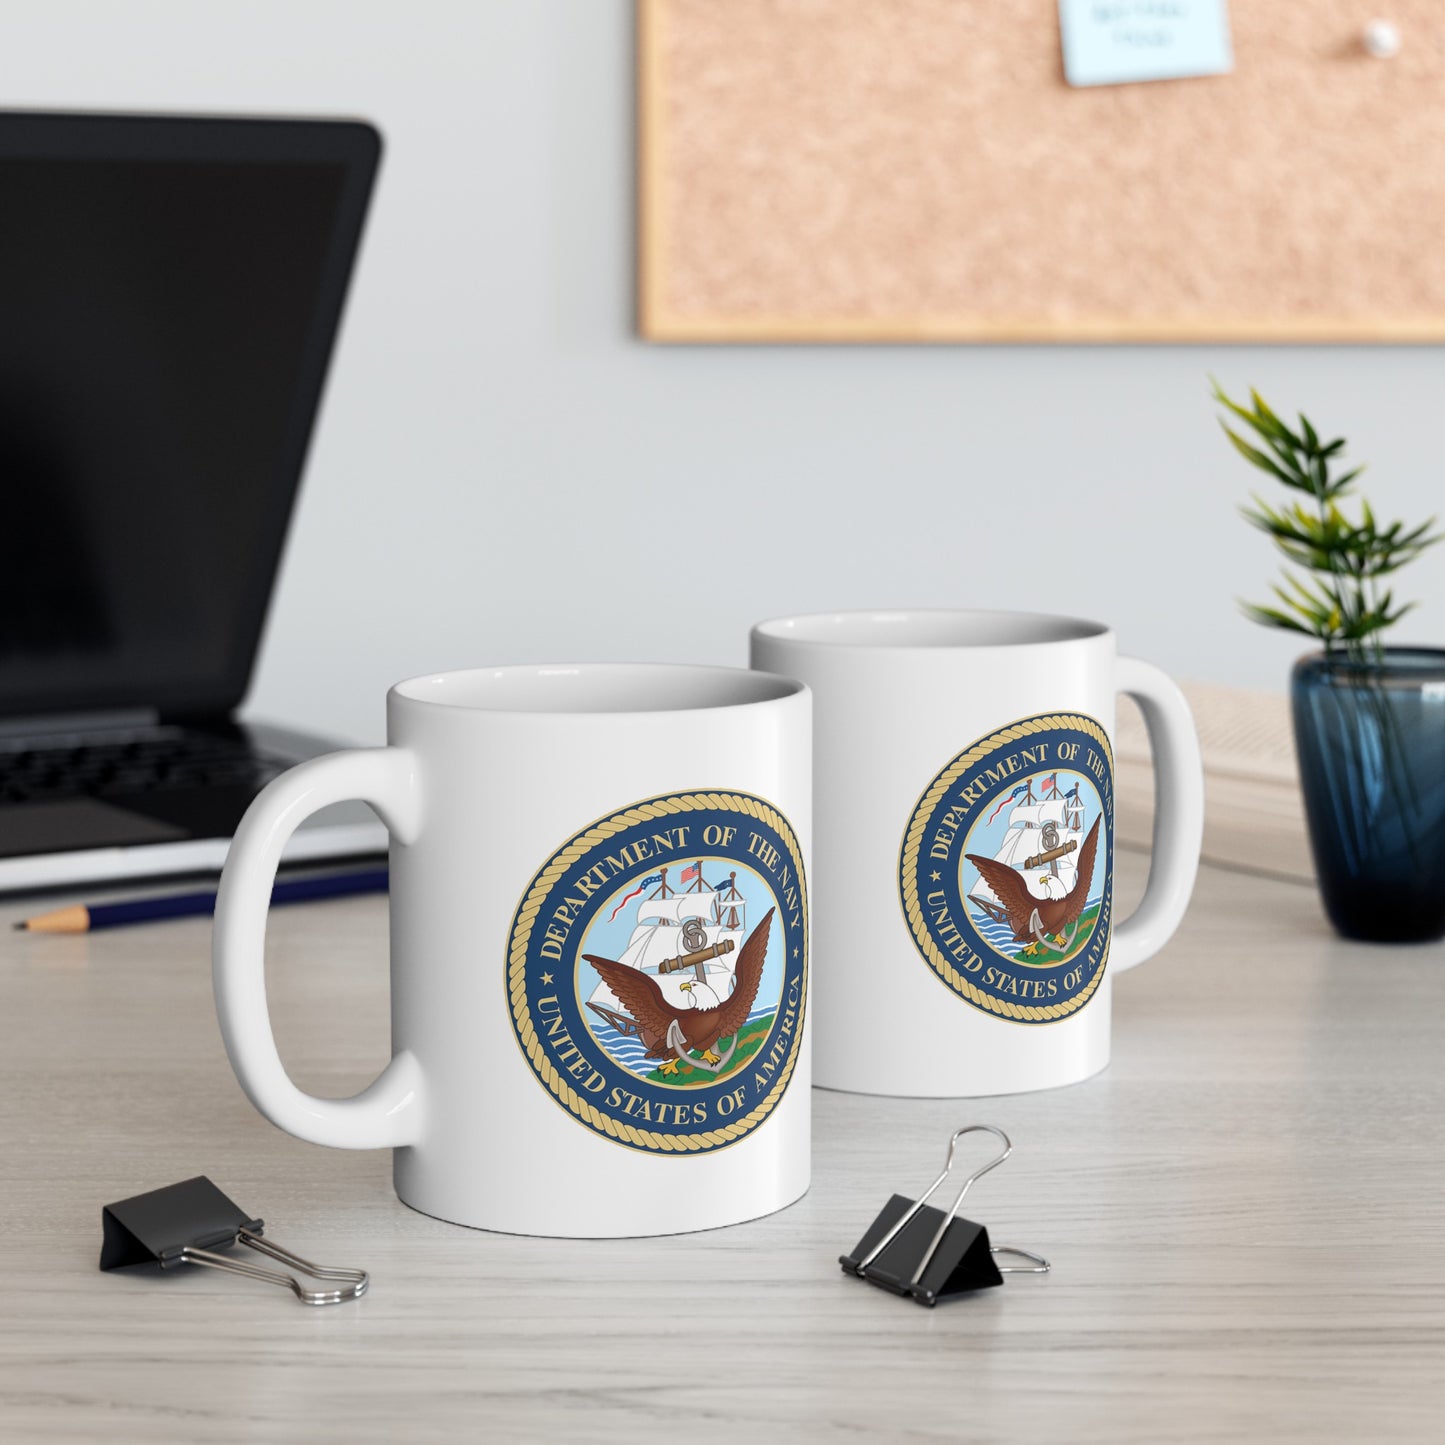 Navy Department Coffee Mug - Double Sided White Ceramic 11oz by TheGlassyLass.com